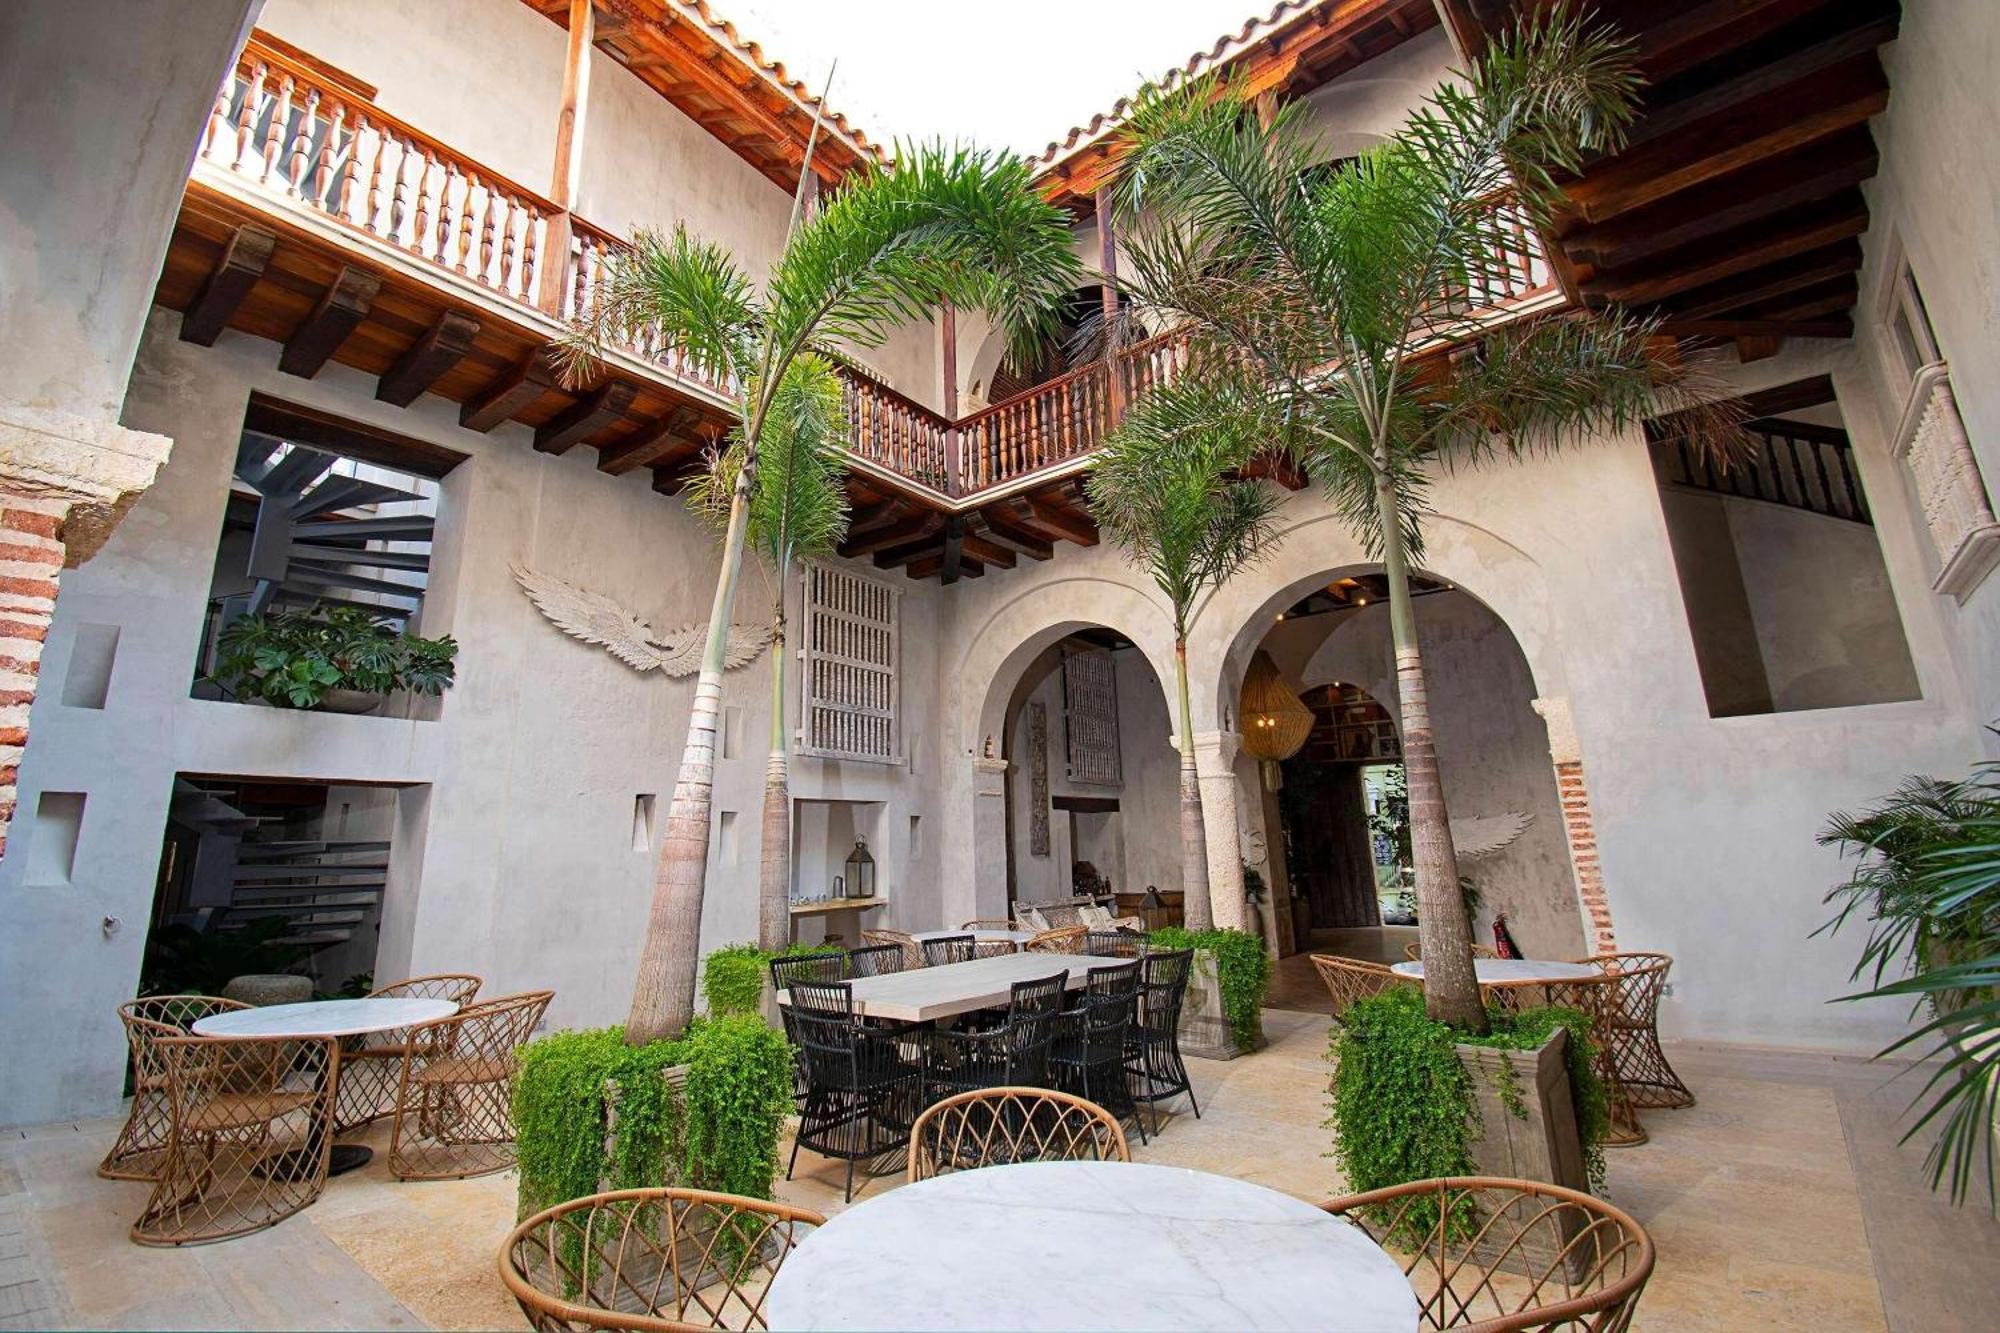 Hotel Casa Don Luis By Faranda Boutique, A Member Of Radisson Individuals Cartagena 外观 照片